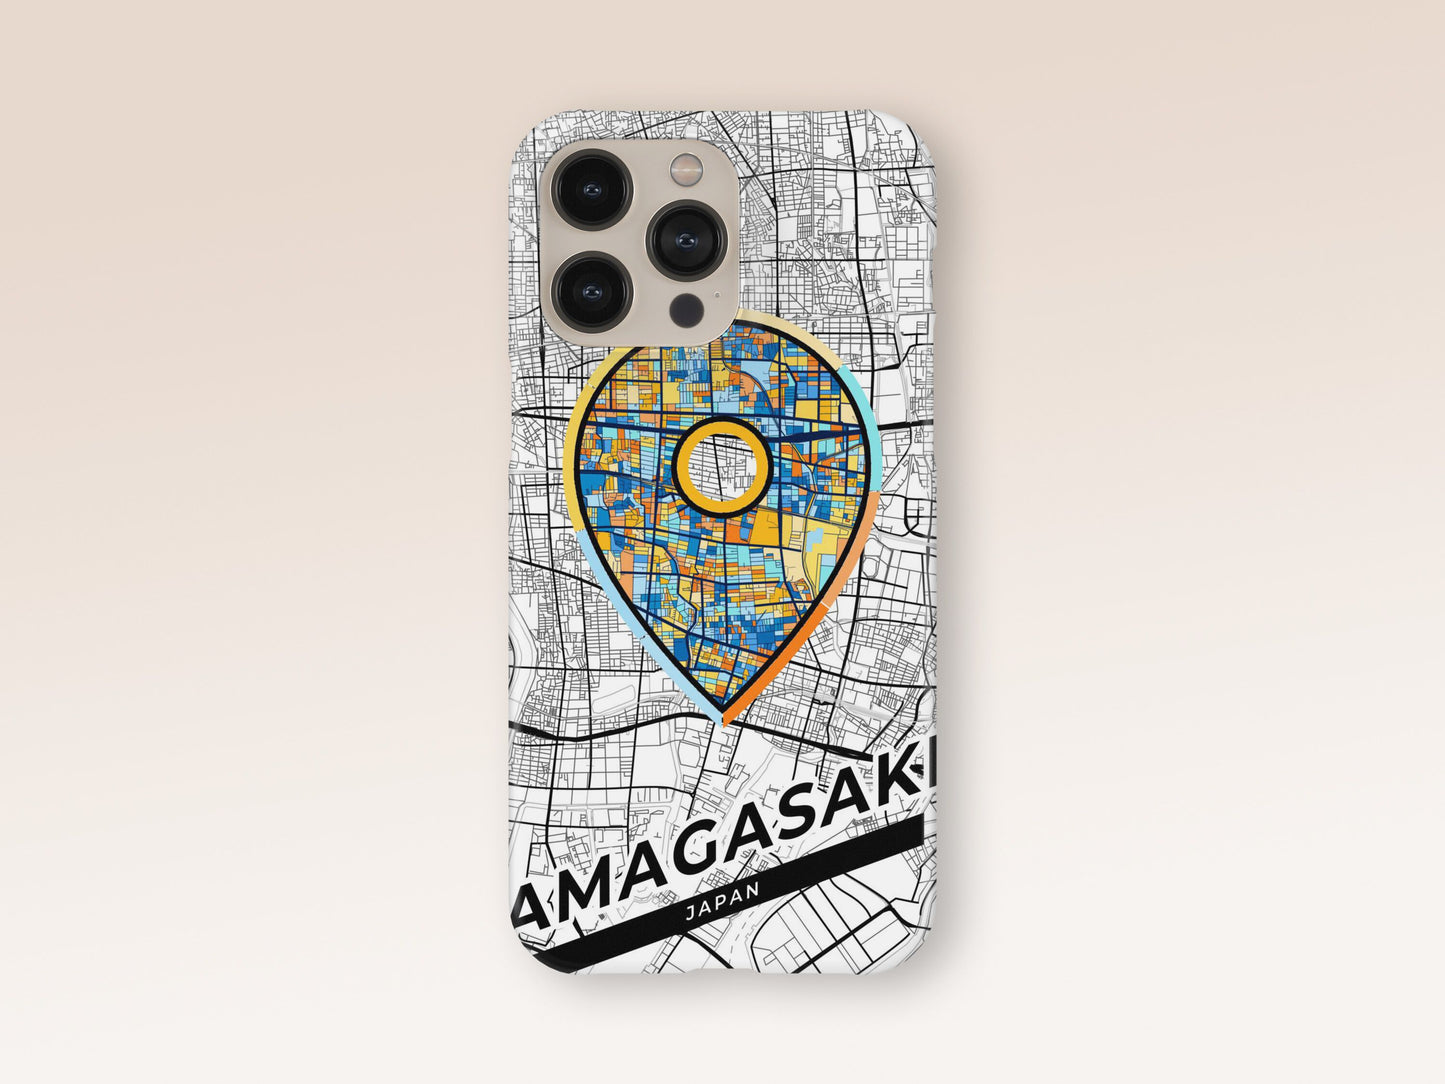 Amagasaki Japan slim phone case with colorful icon. Birthday, wedding or housewarming gift. Couple match cases. 1